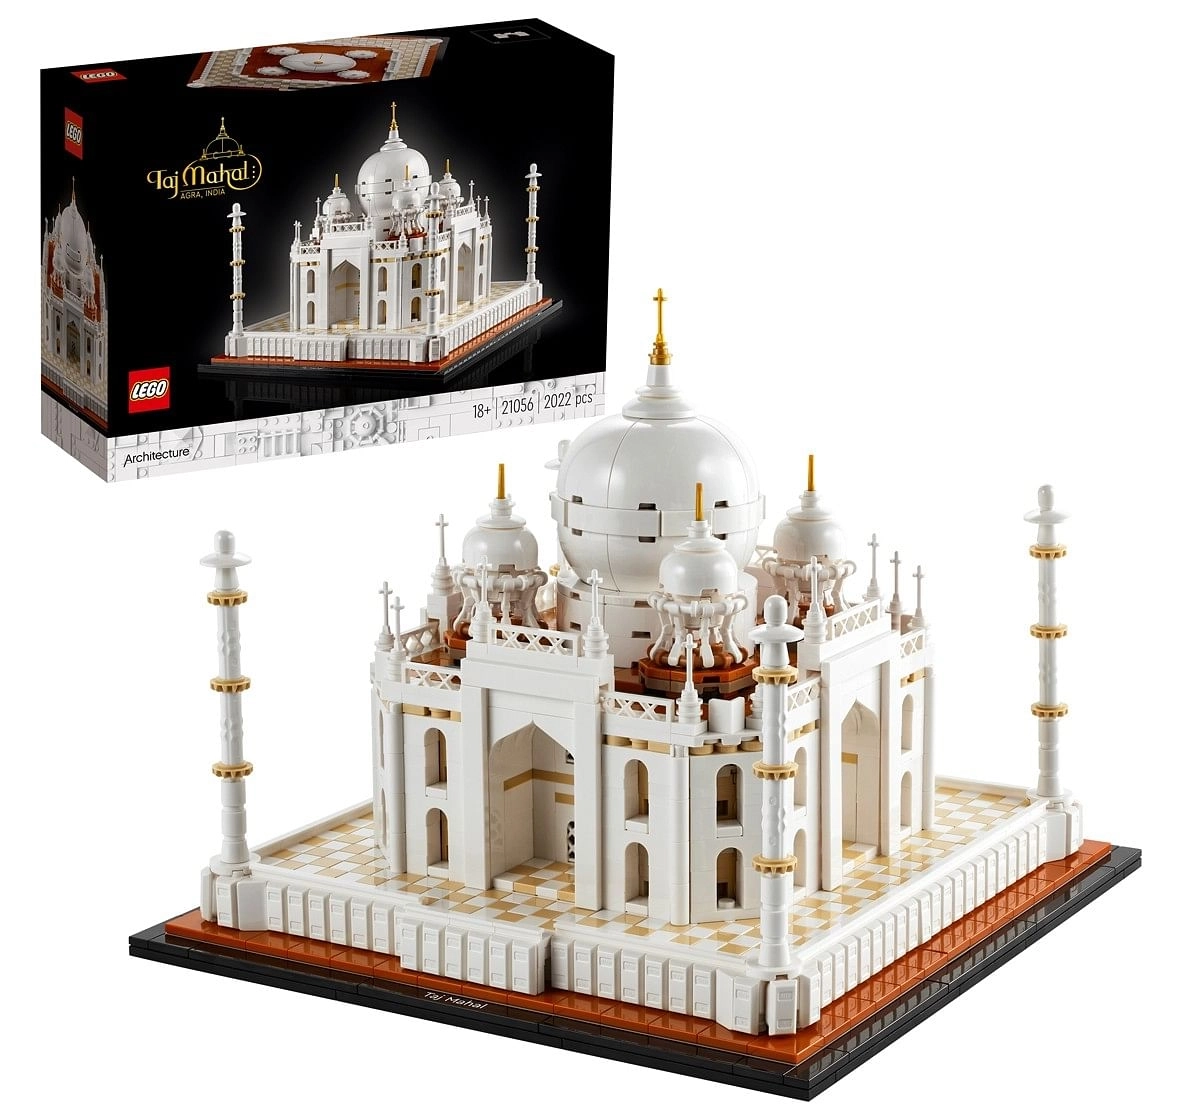 LEGO Architecture Landmarks Collection Taj Mahal 21056 Building Kit (2,022 Pieces)